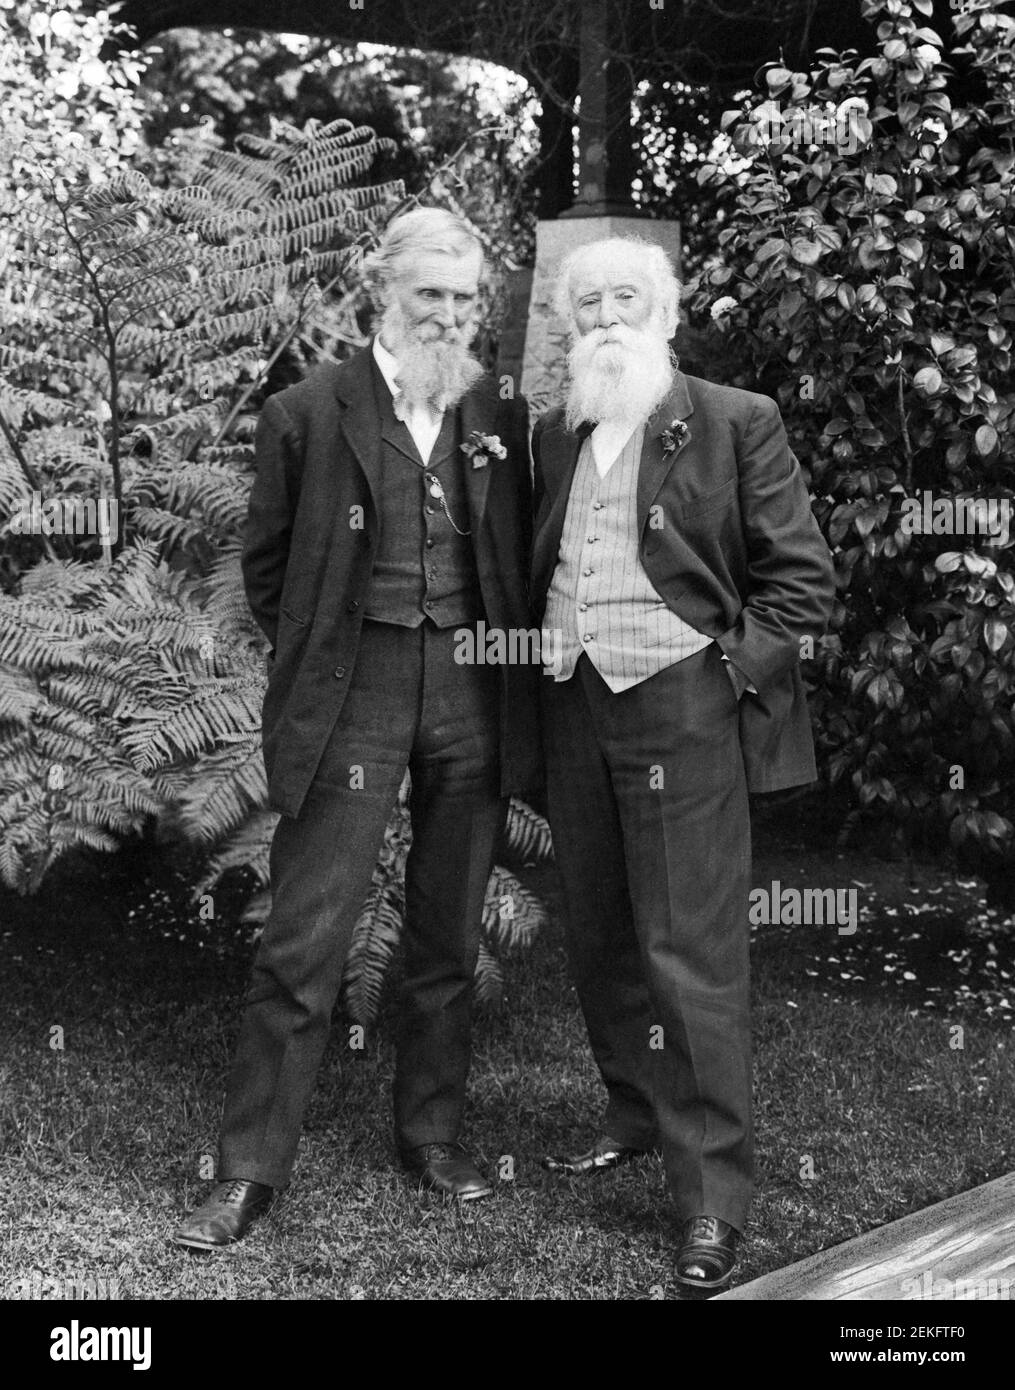 Schottisch-amerikanischer Naturforscher John Muir (1838-1914) und amerikanischer Naturforscher John Burroughs (1837-1921) in Pasadena, Kalifornien, ca. 1909-1912 Stockfoto